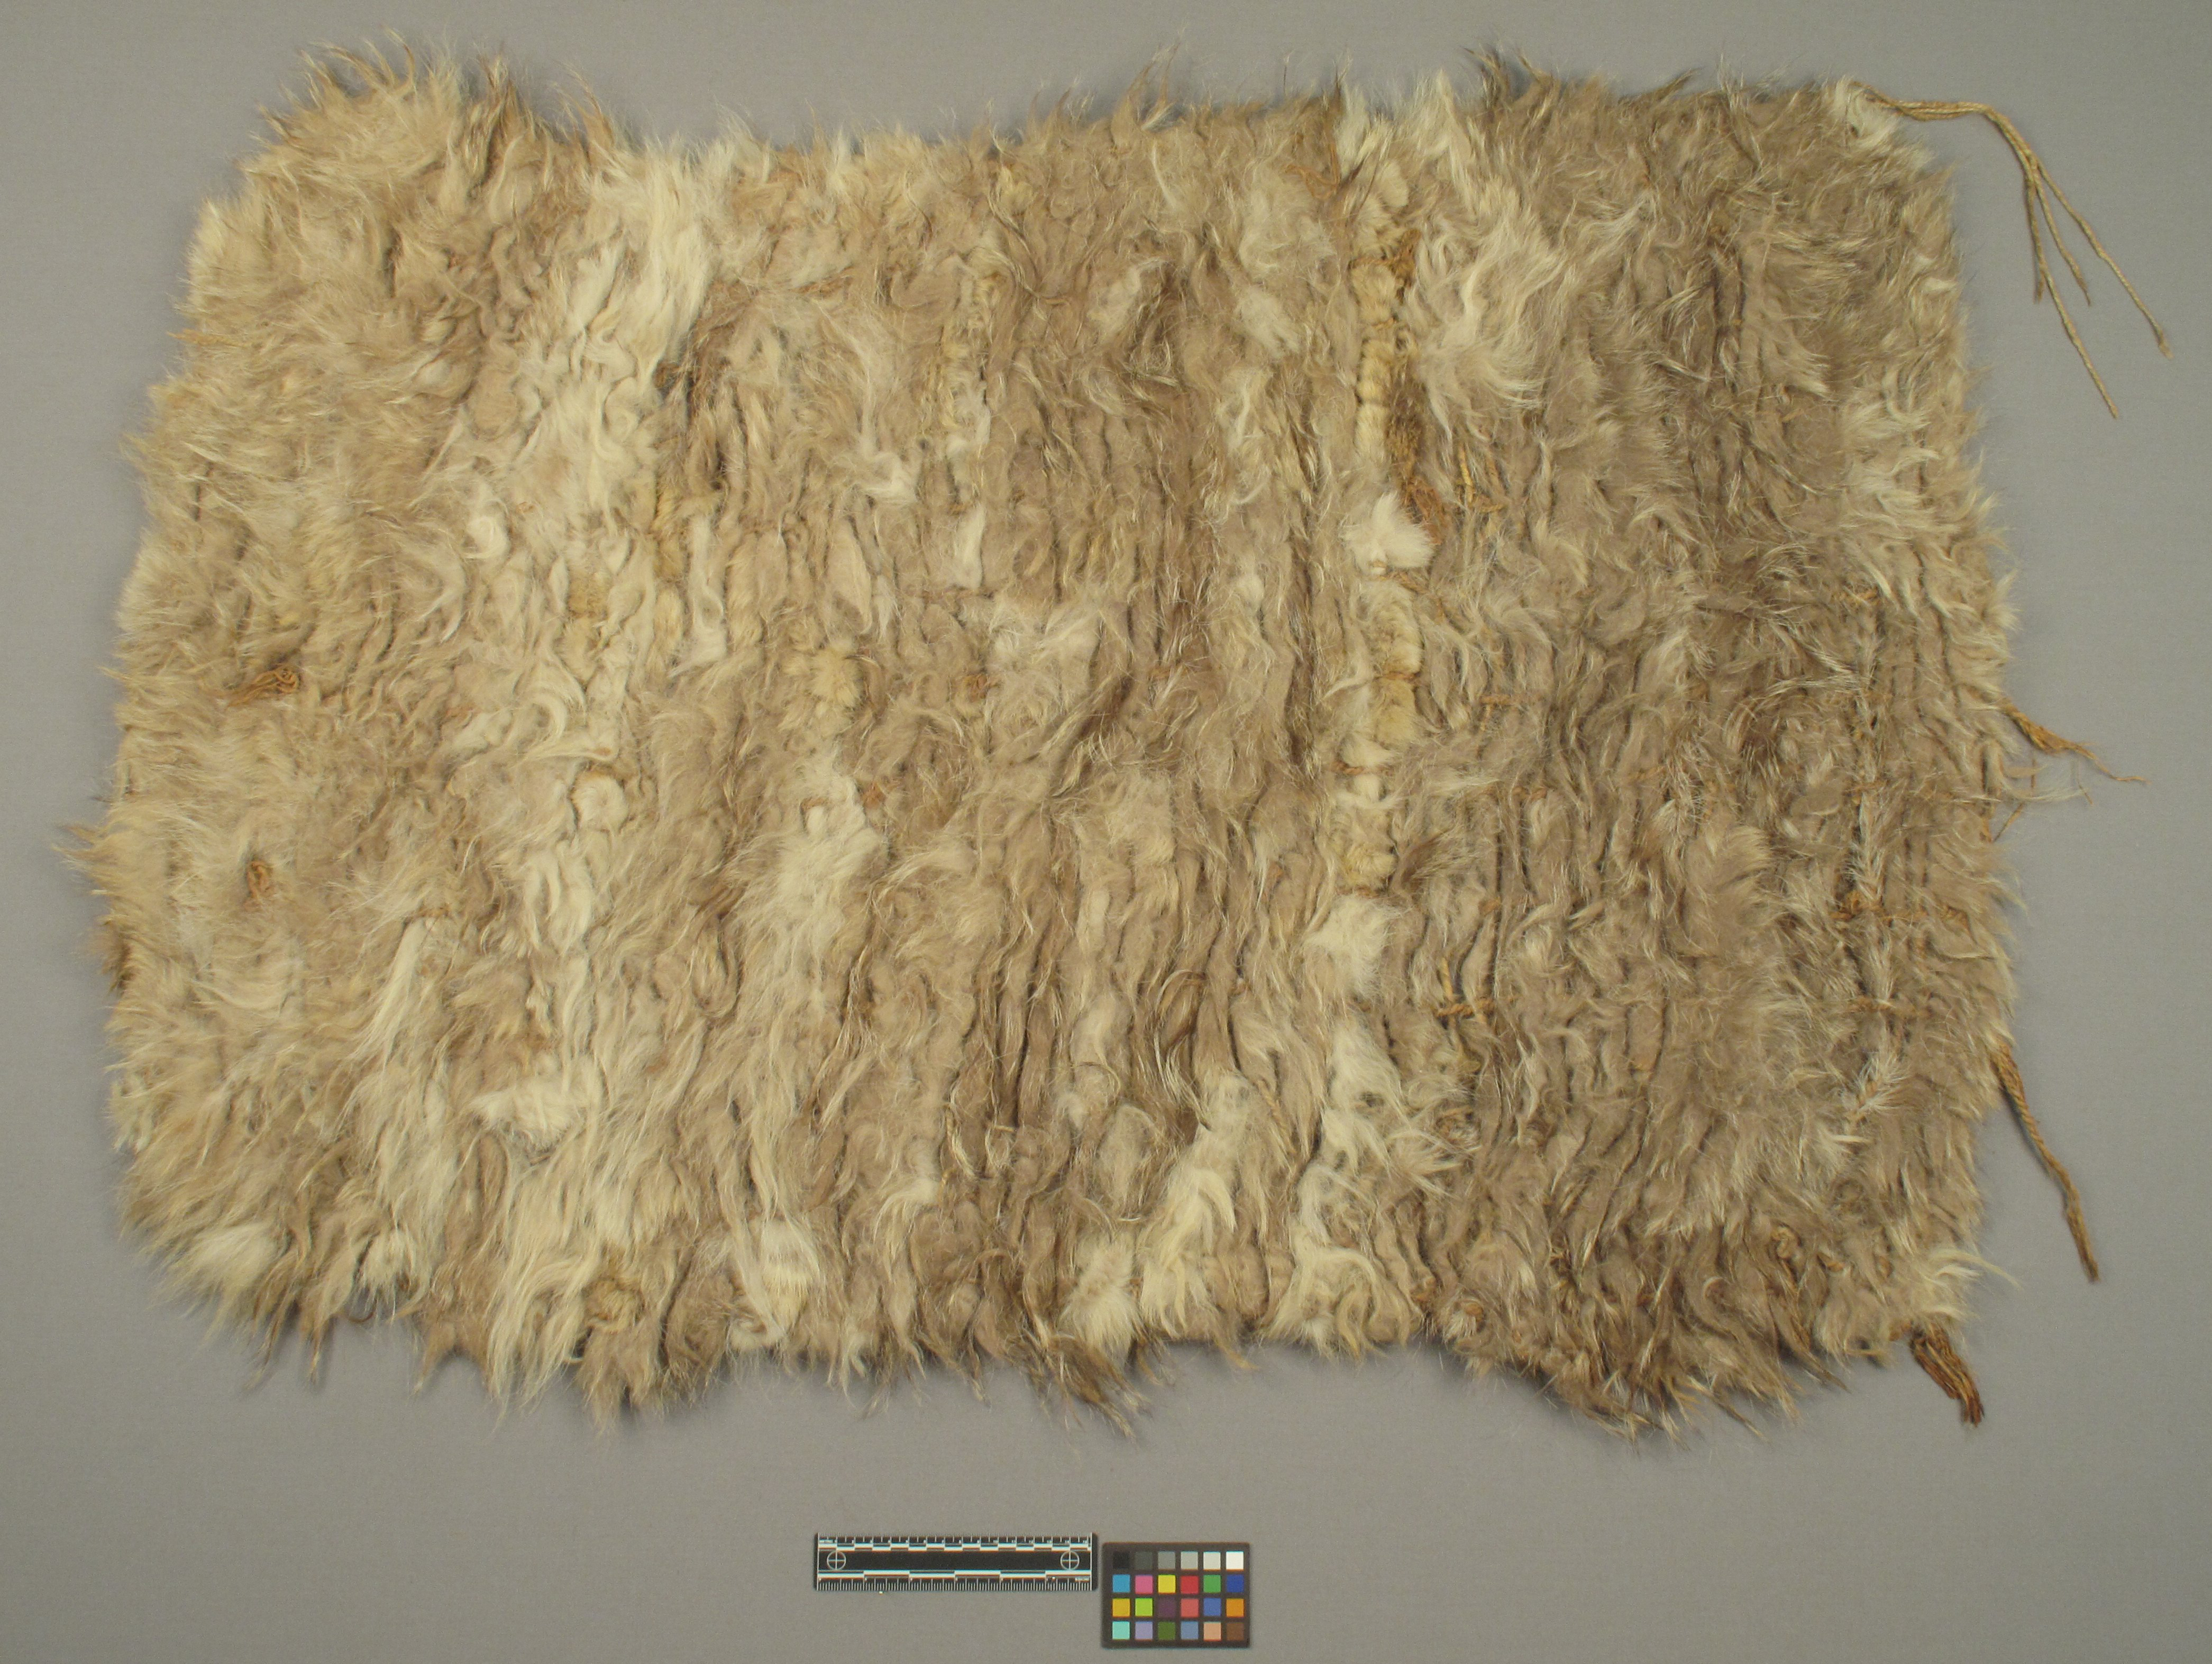 RRN - Items - The NMNH: E1895-0 - Robe Of Fur And Bark Cordage